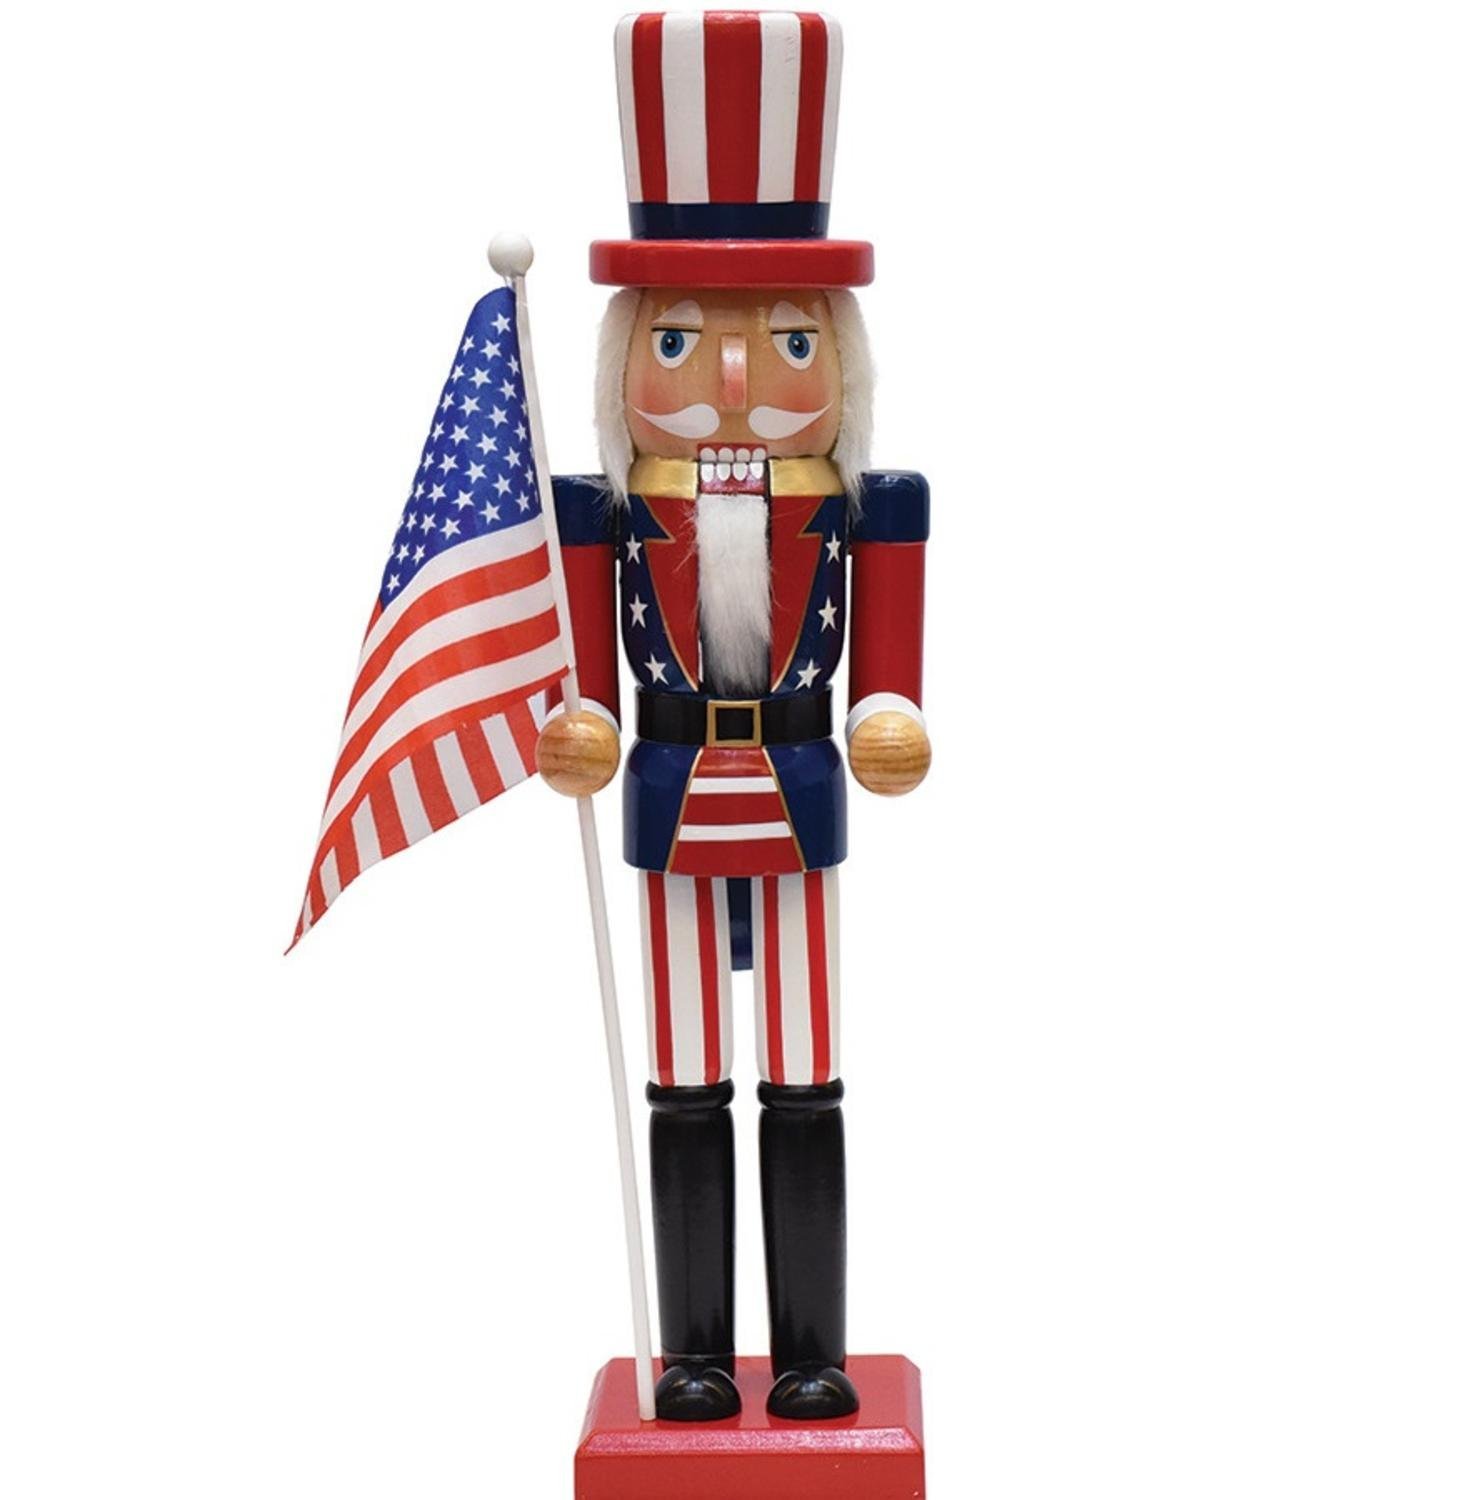 Amazon.com: Northlight Decorative Wooden Patriotic Uncle Sam ...